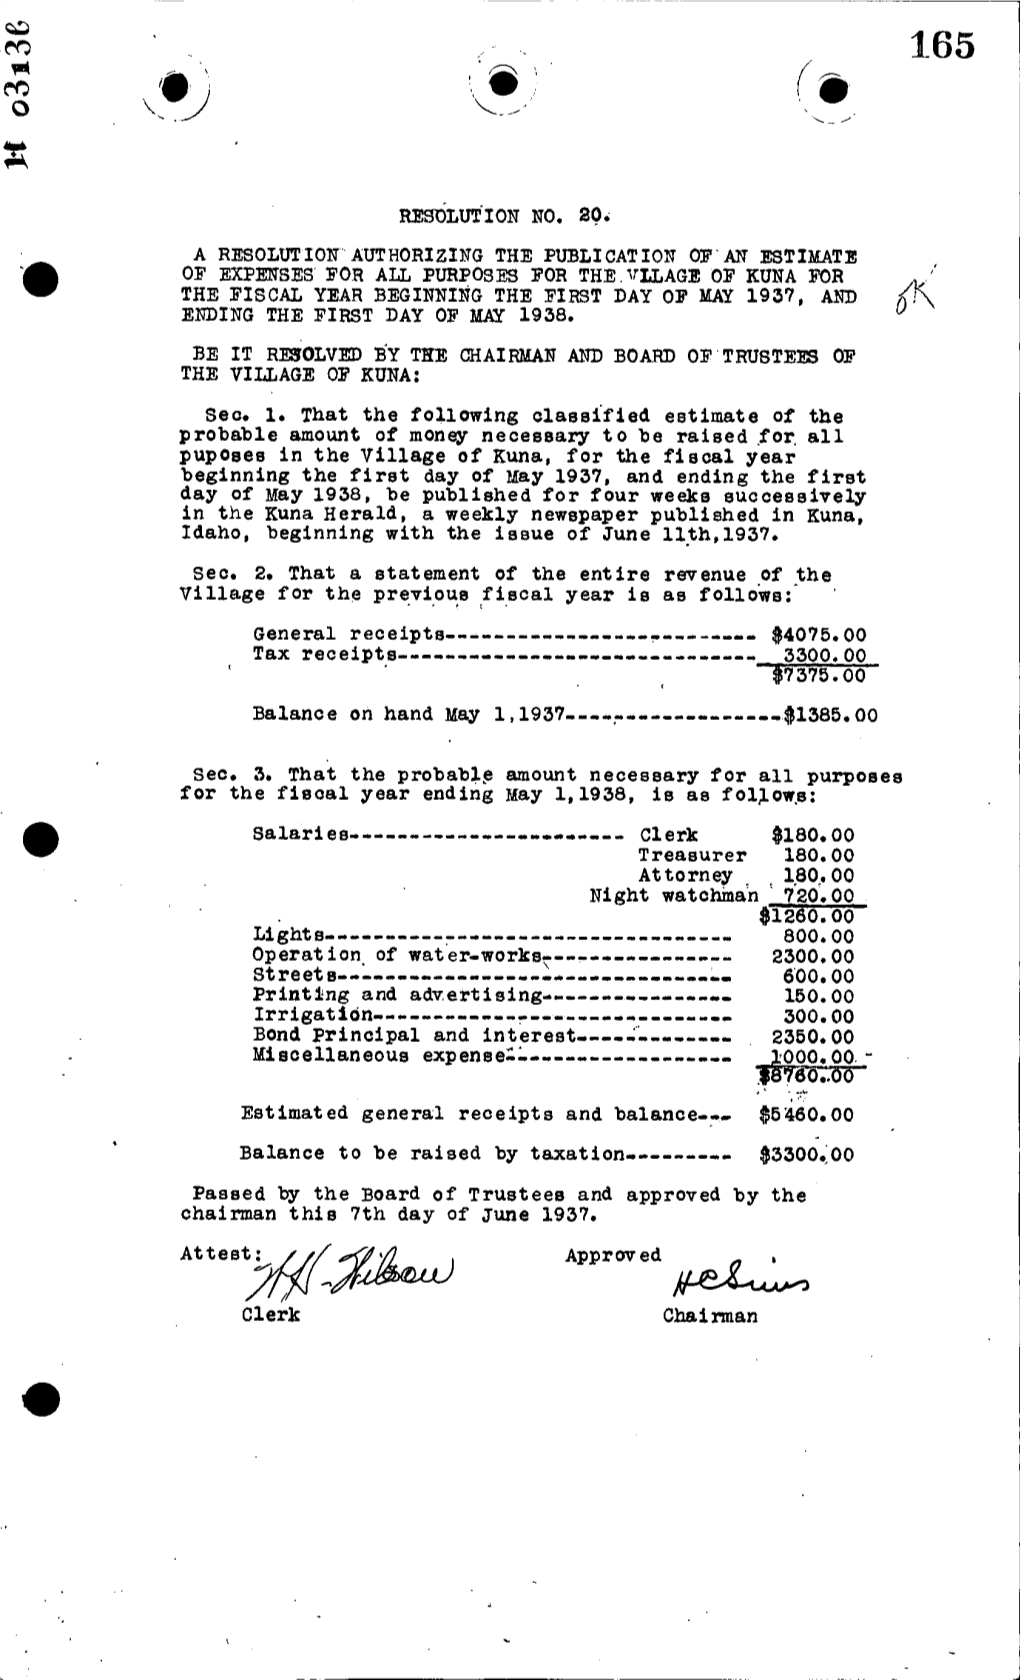 R20-1937 Authorizing Publication of Expenses Estimate